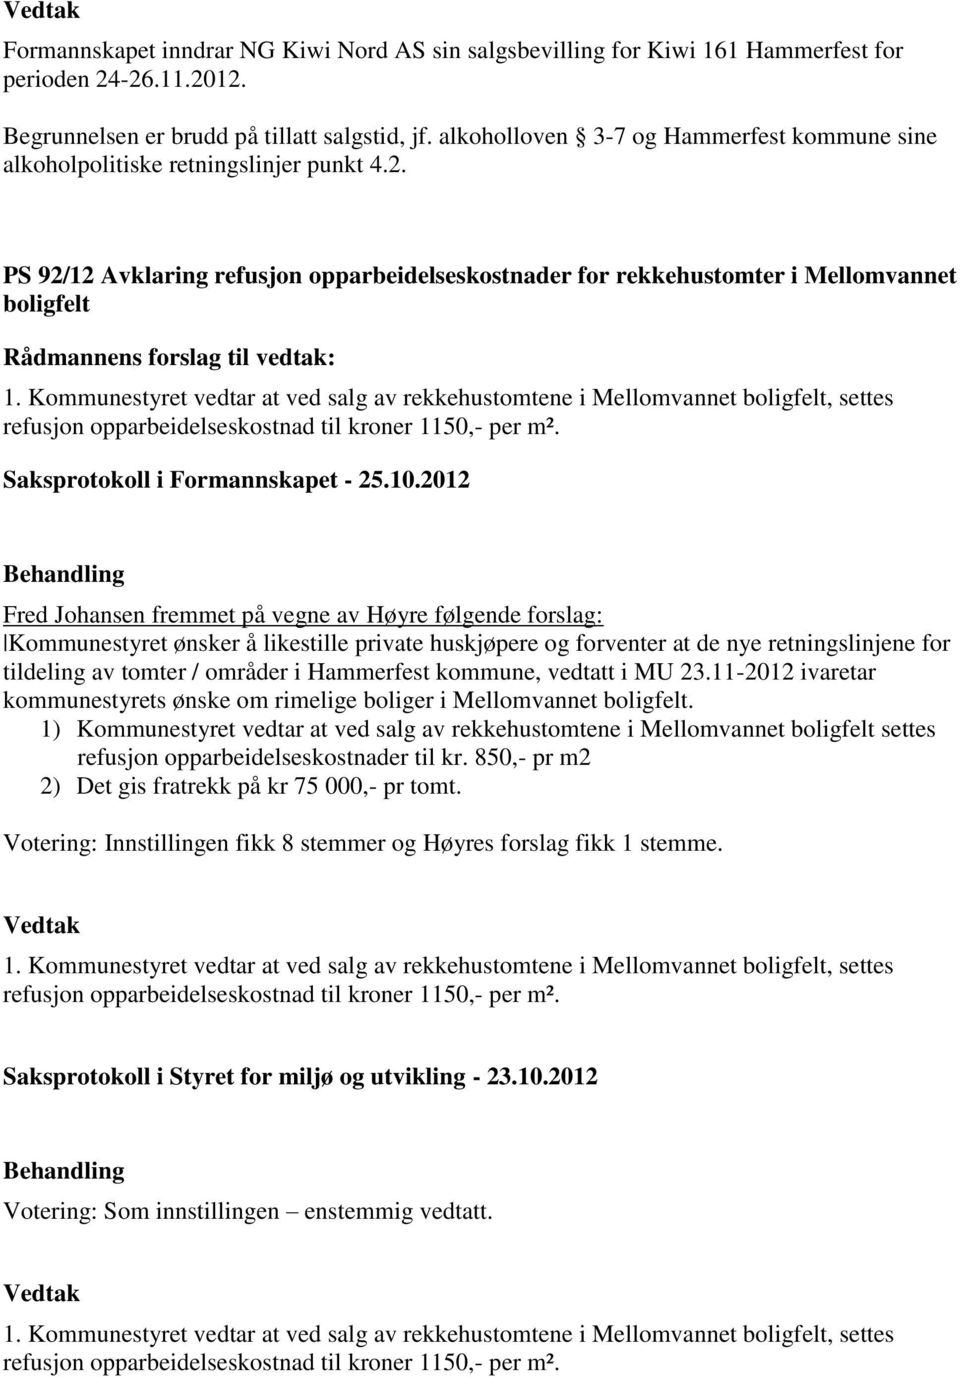 11-2012 ivaretar kommunestyrets ønske om rimelige boliger i Mellomvannet boligfelt.